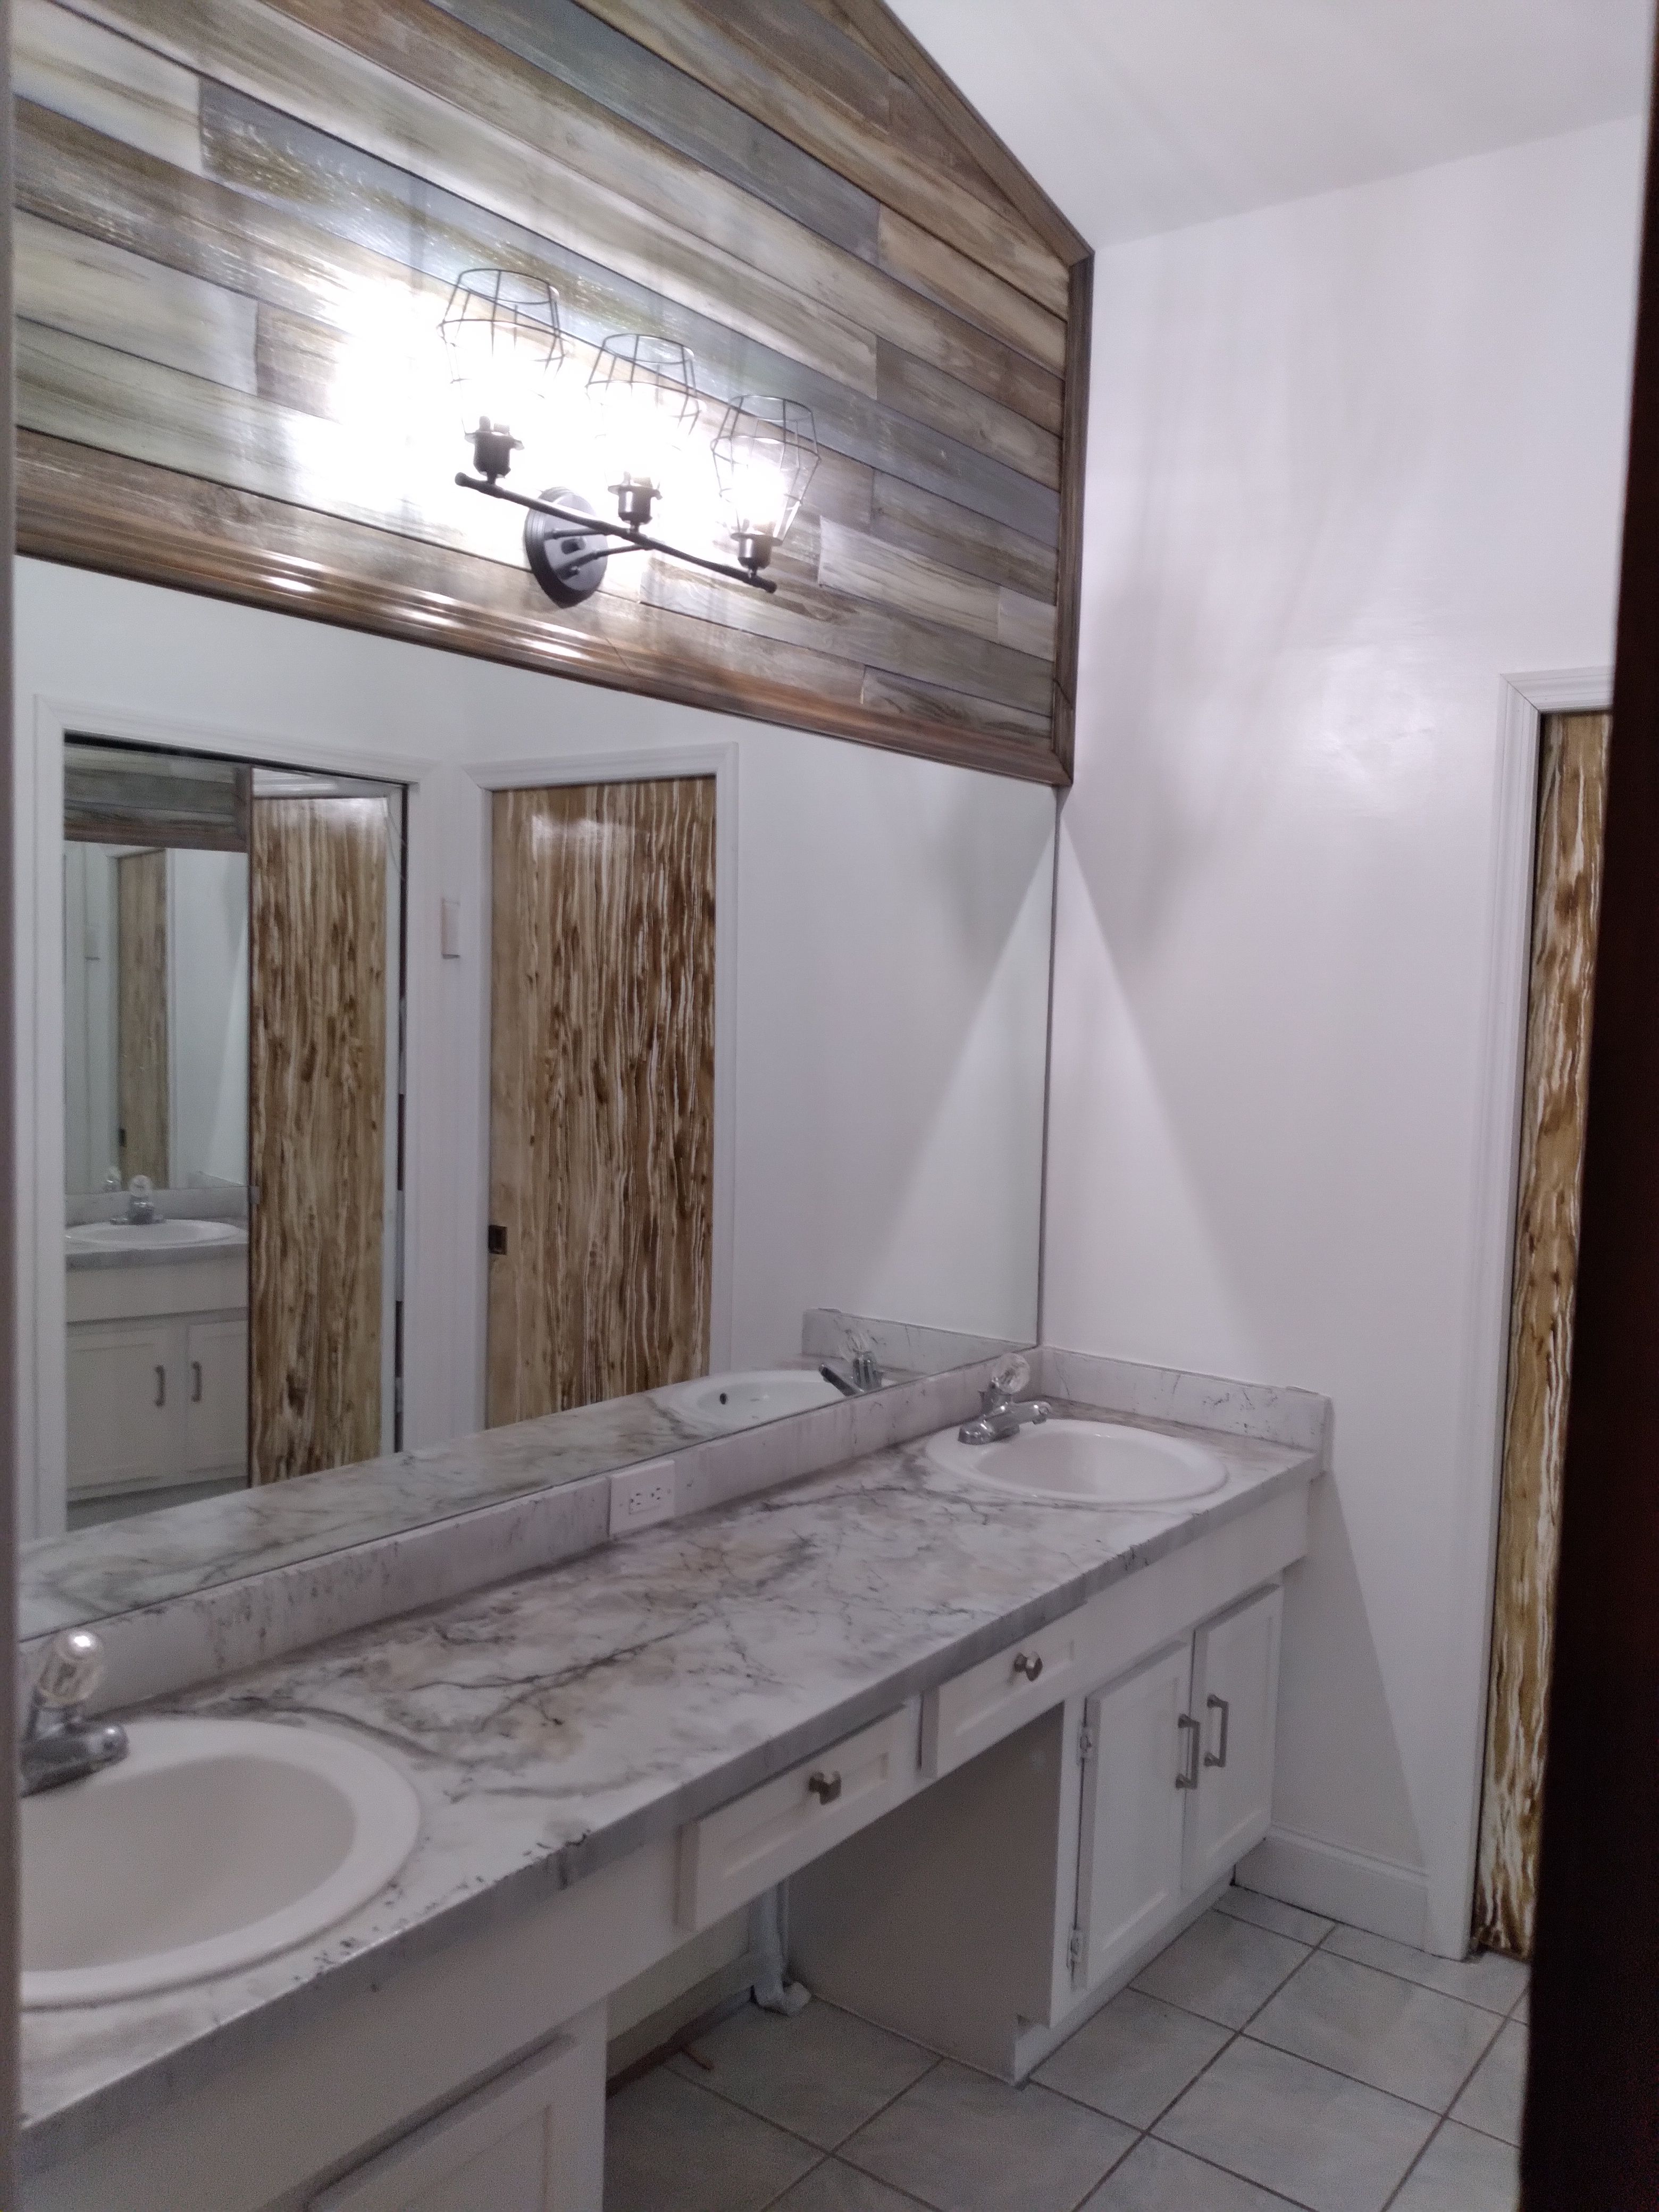 Bathroom restoration for Velez Design Consulting & Remodeling LLC in Brandon, FL